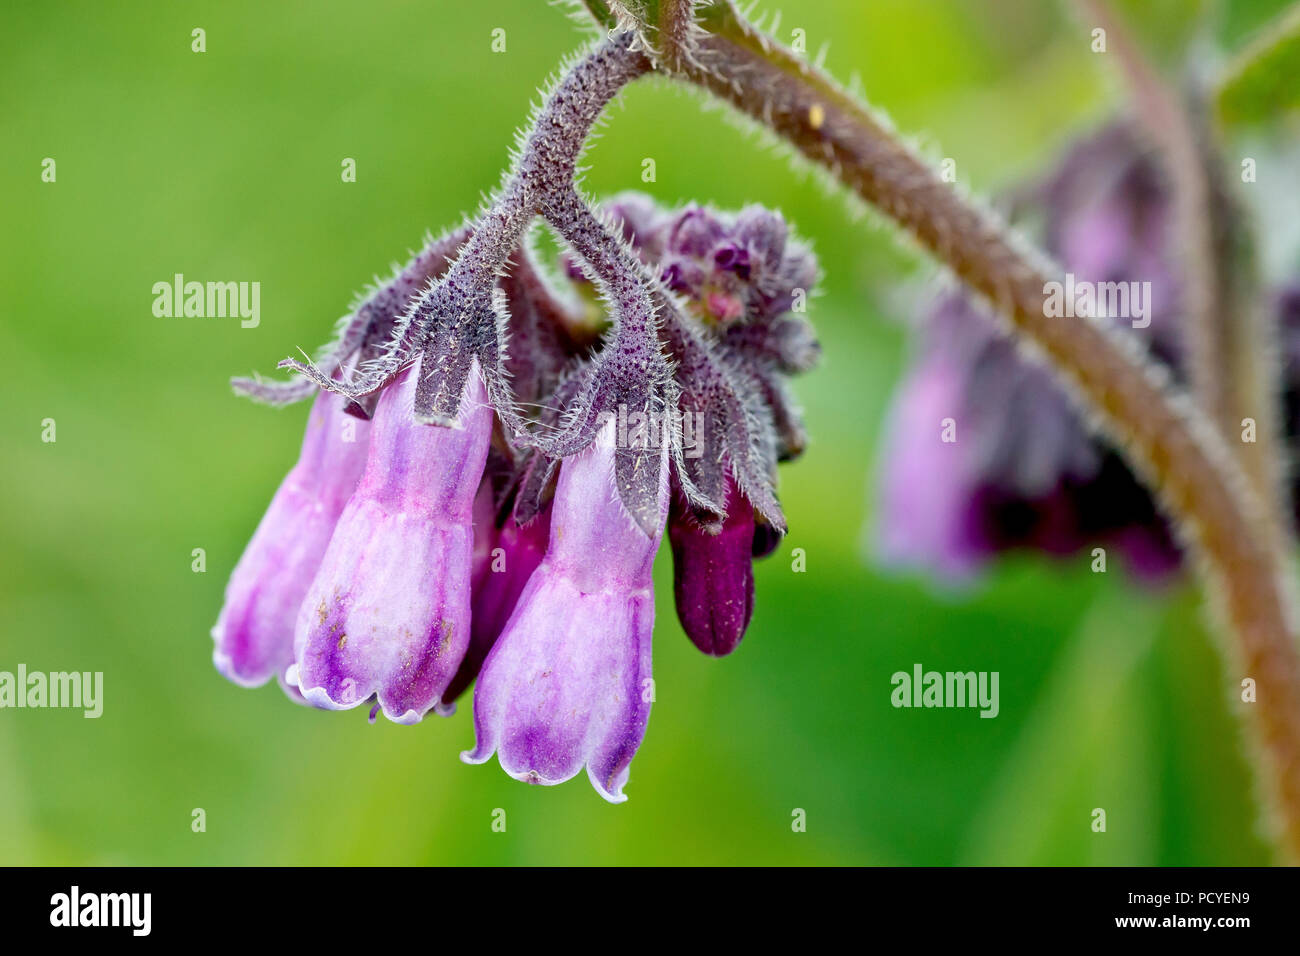 Comfrey, probably the hybrid species Russian Comfrey (symphytum x uplandicum), close up of a single flower head. Stock Photo